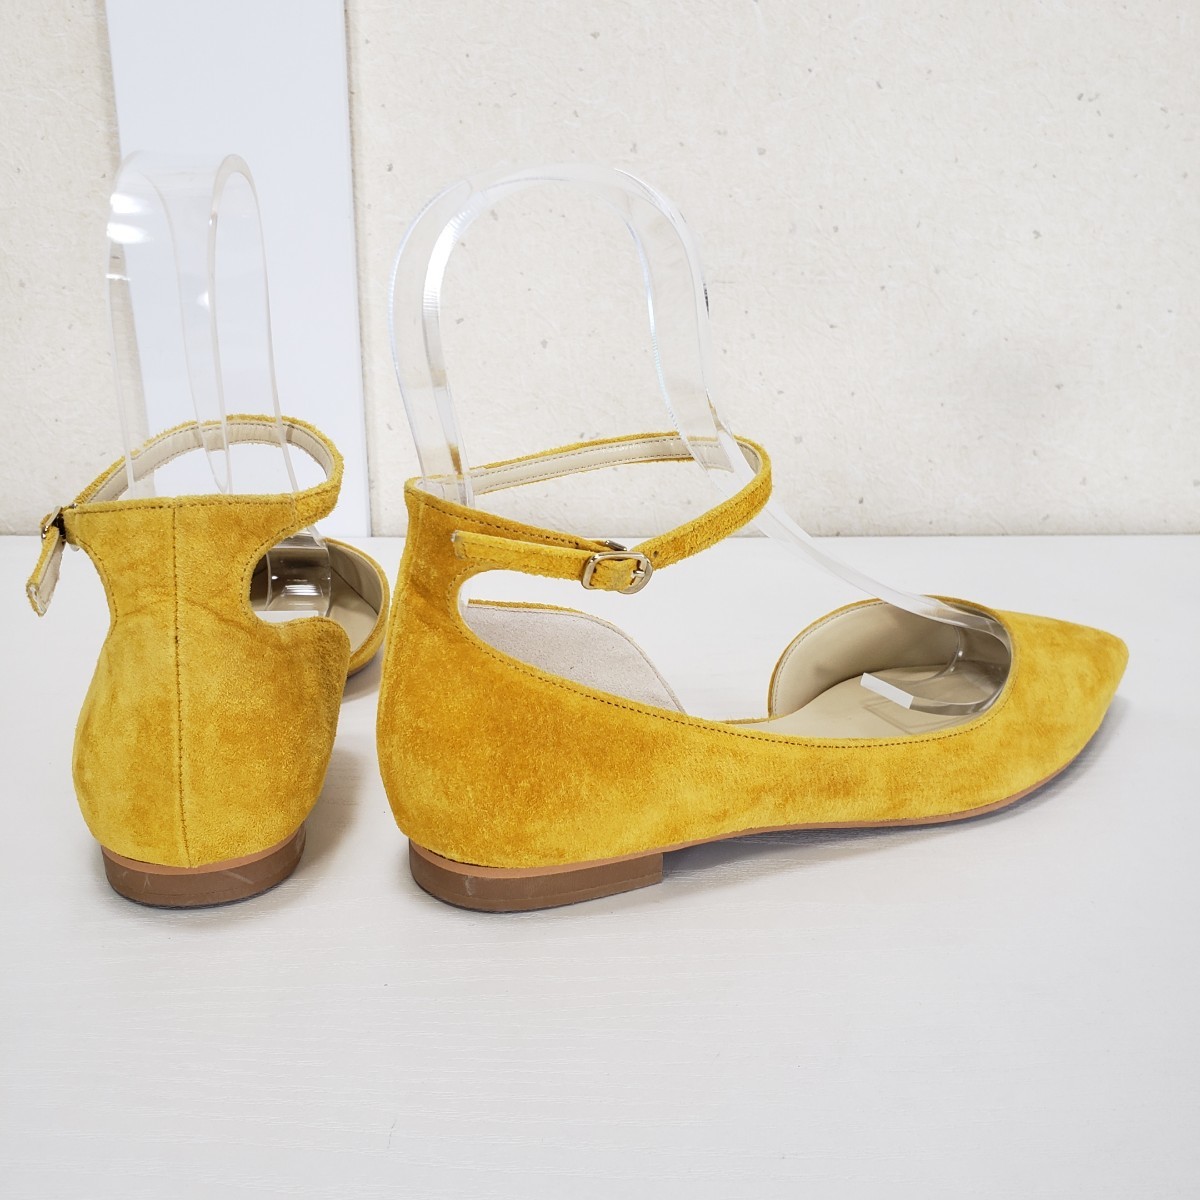  beautiful *AFFRANCHIE SLOBEa franc si-( Iena slow b) original leather po Inte dotu strap pumps flat shoes (38#24.0cm)